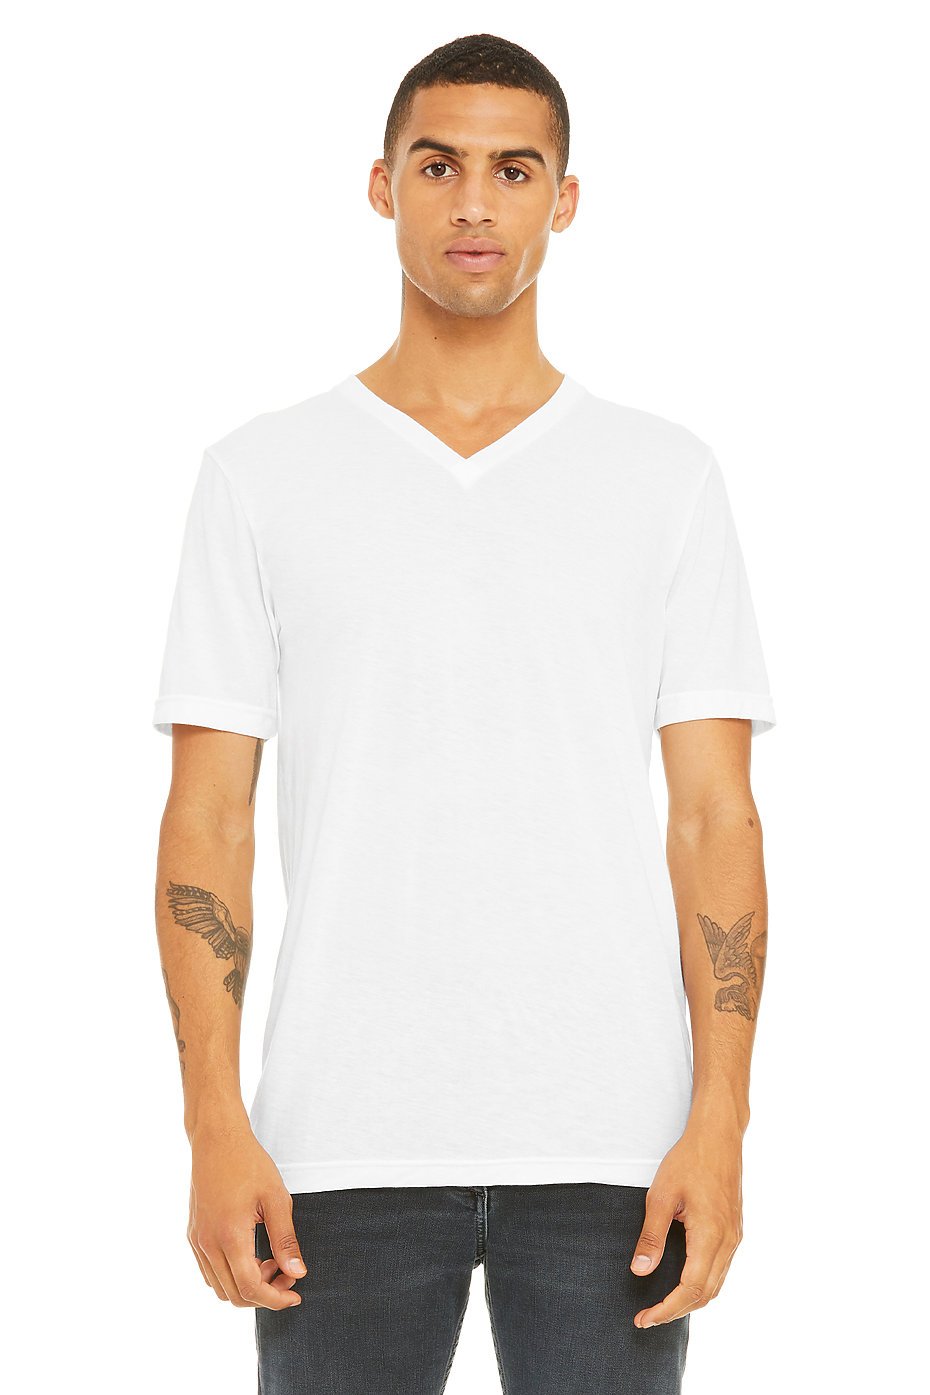 Canvas Bella Mens Unisex Size S M L XL 2XL TriBlend V-Neck T-Shirt Vee Tee 3415